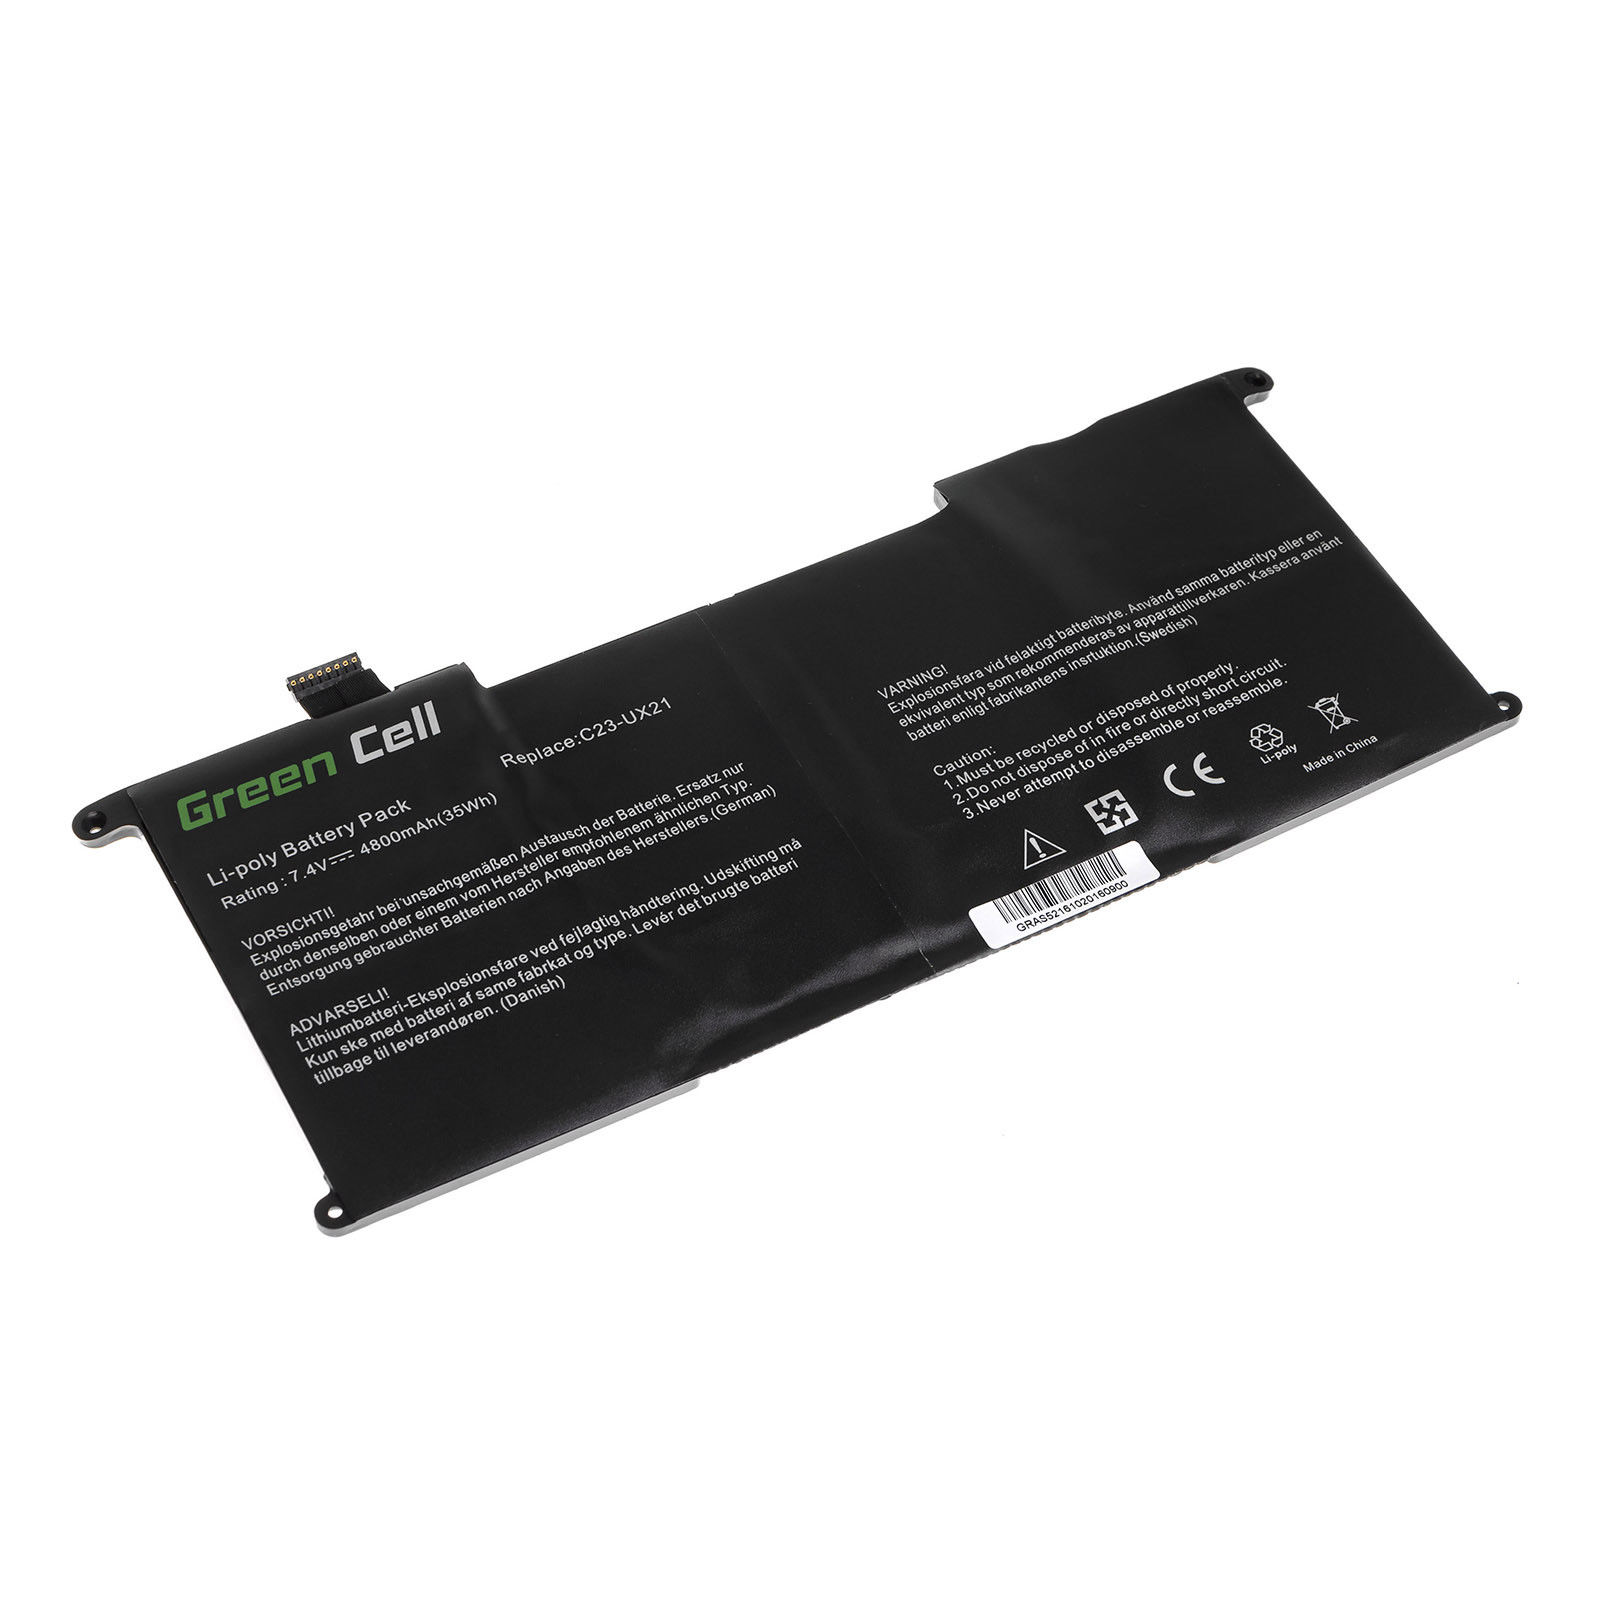 Asus UX21 Ultrabook UX21 UX21A UX21E UX21E-DH52 C23U compatible battery